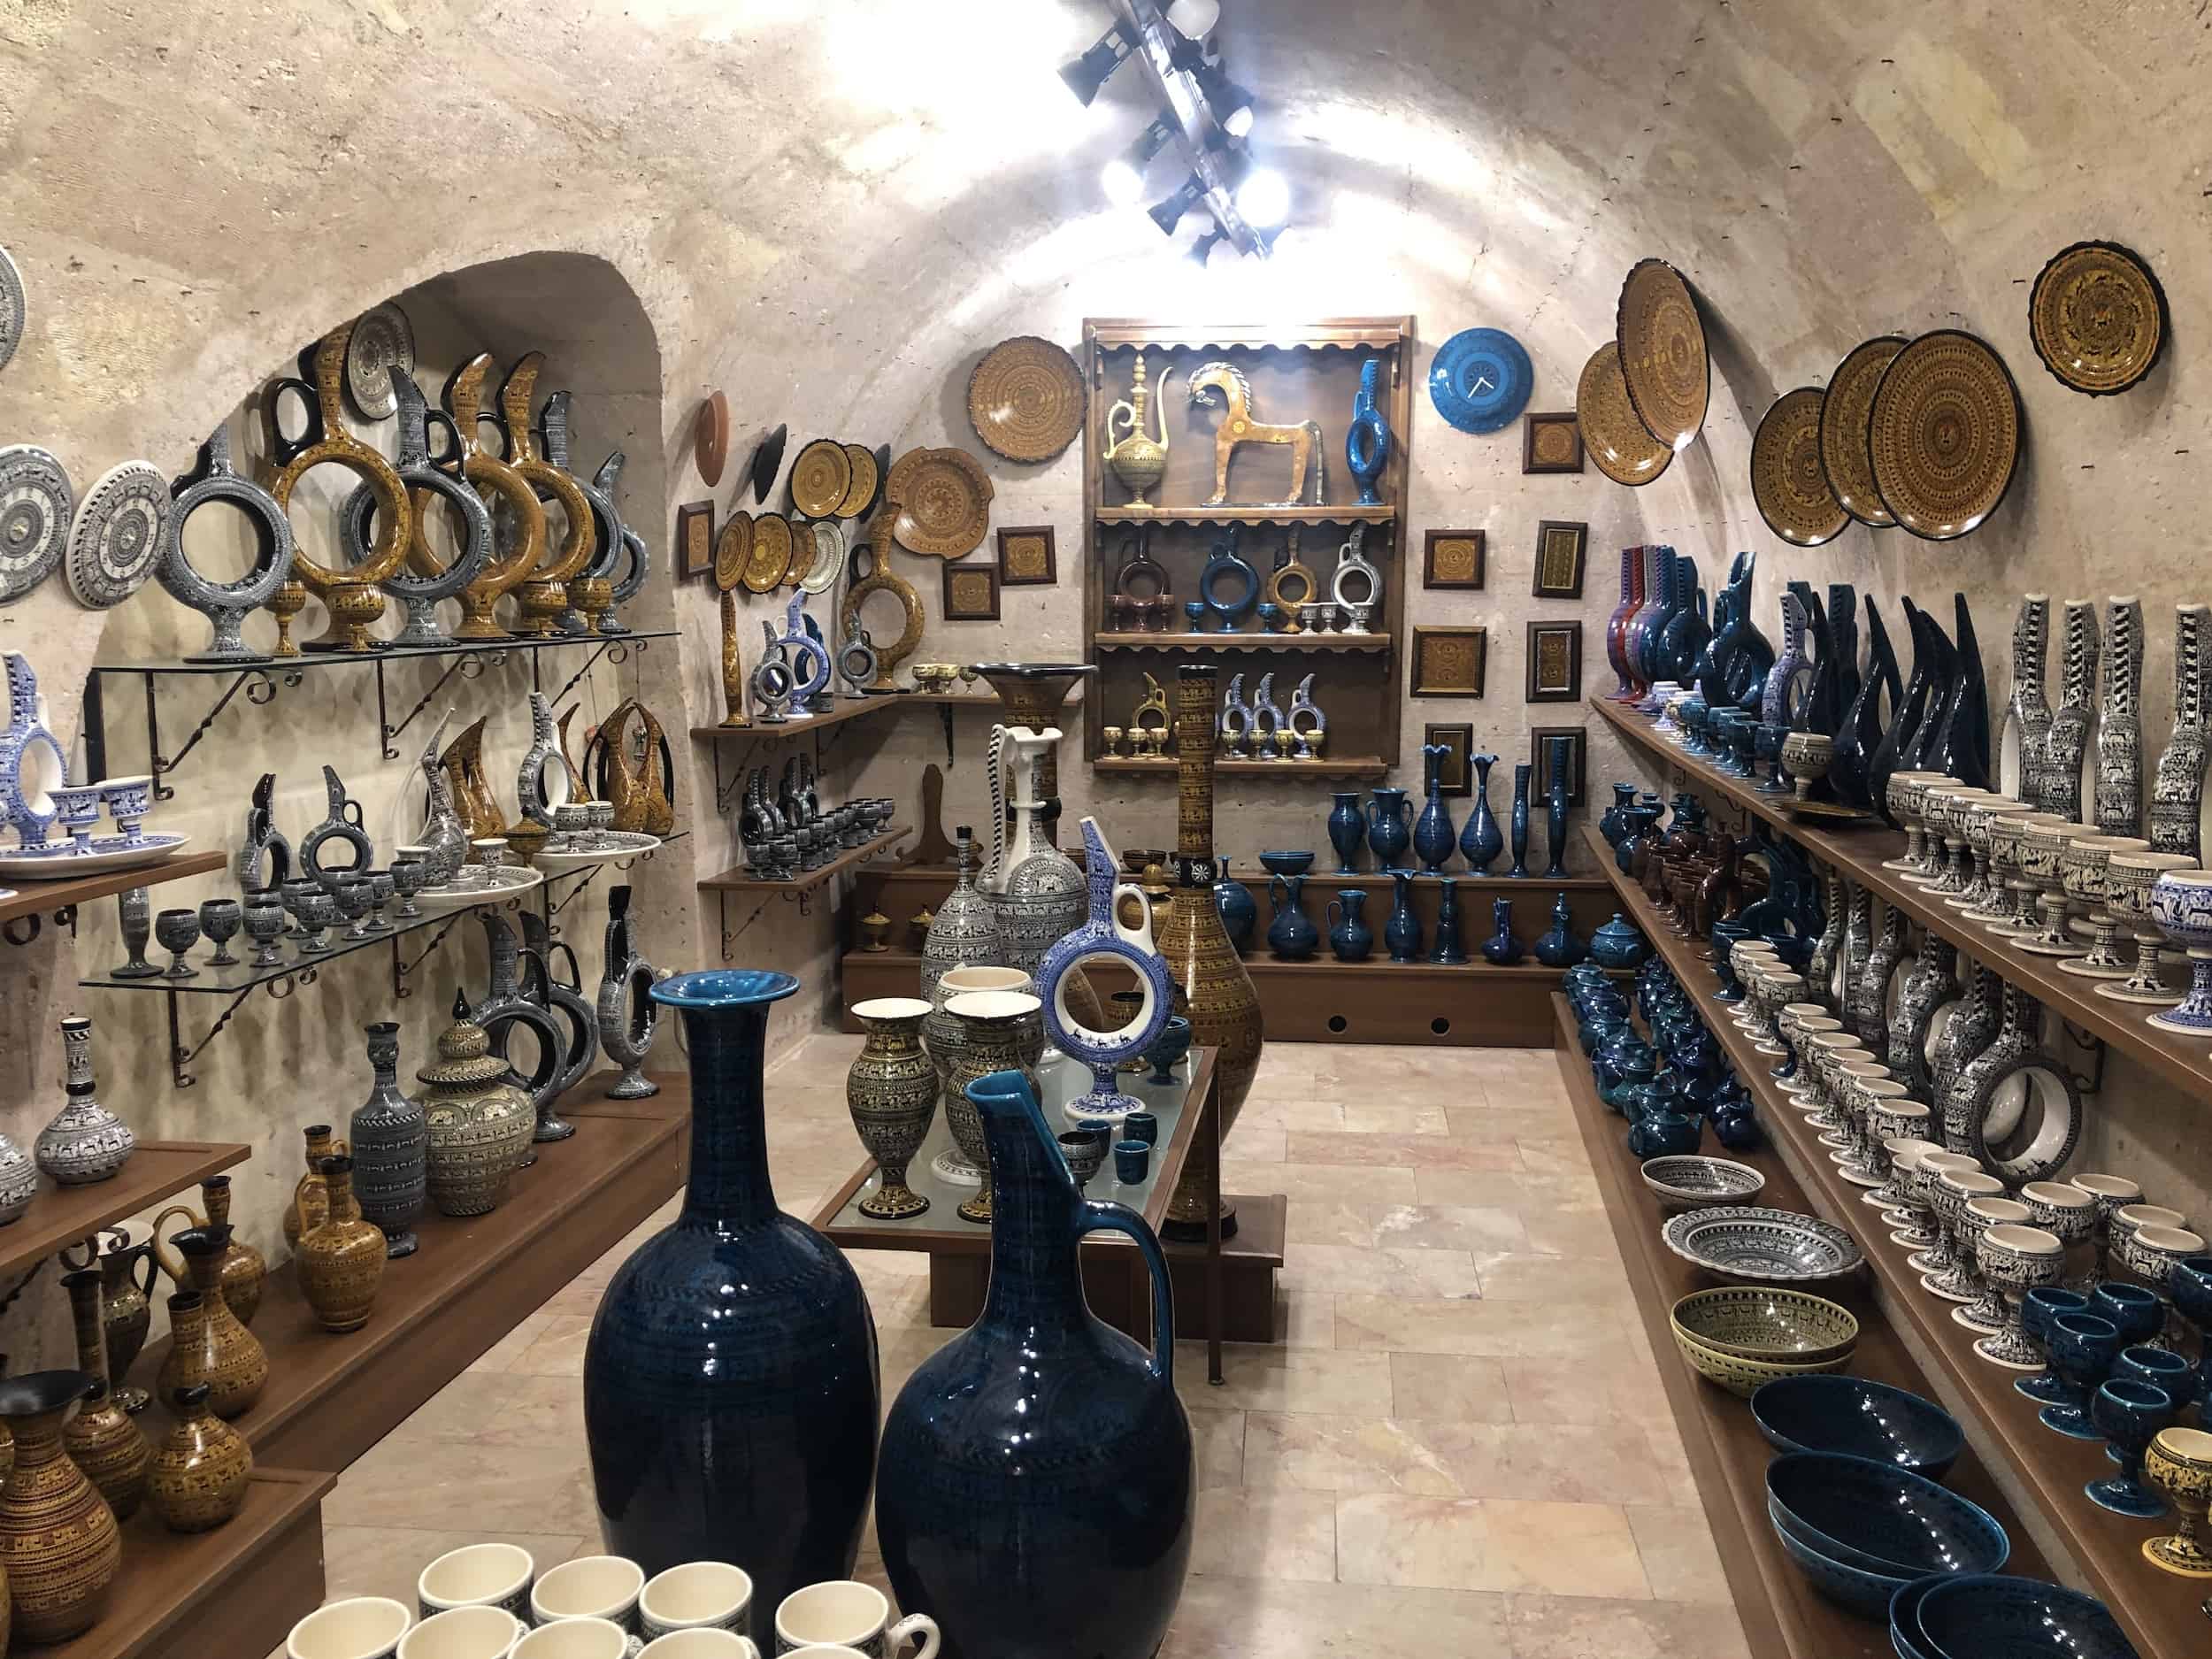 Hittite-style ceramic works at Venessa Seramik in Avanos, Cappadocia, Turkey